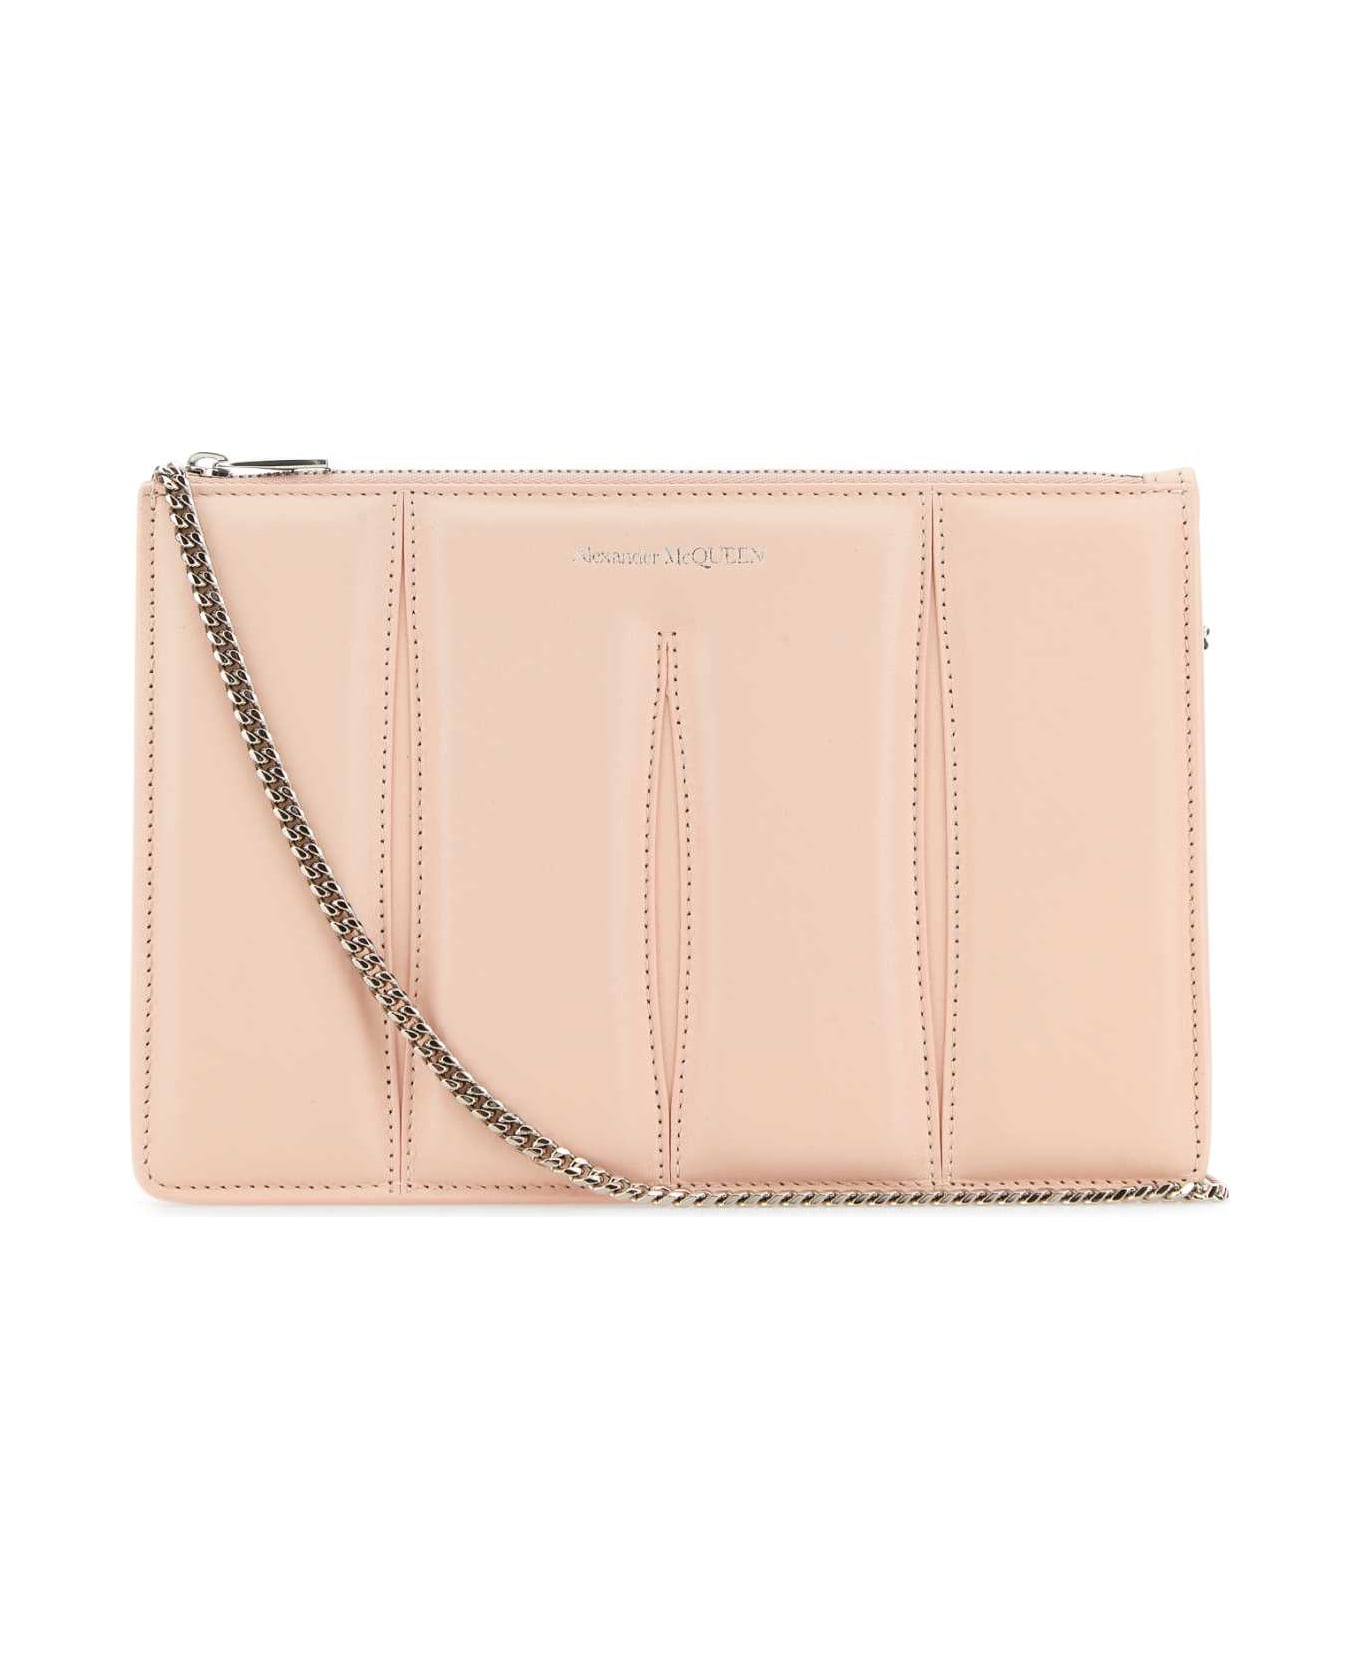 Alexander McQueen Pastel Pink Leather Shoulder Bag - CLAY